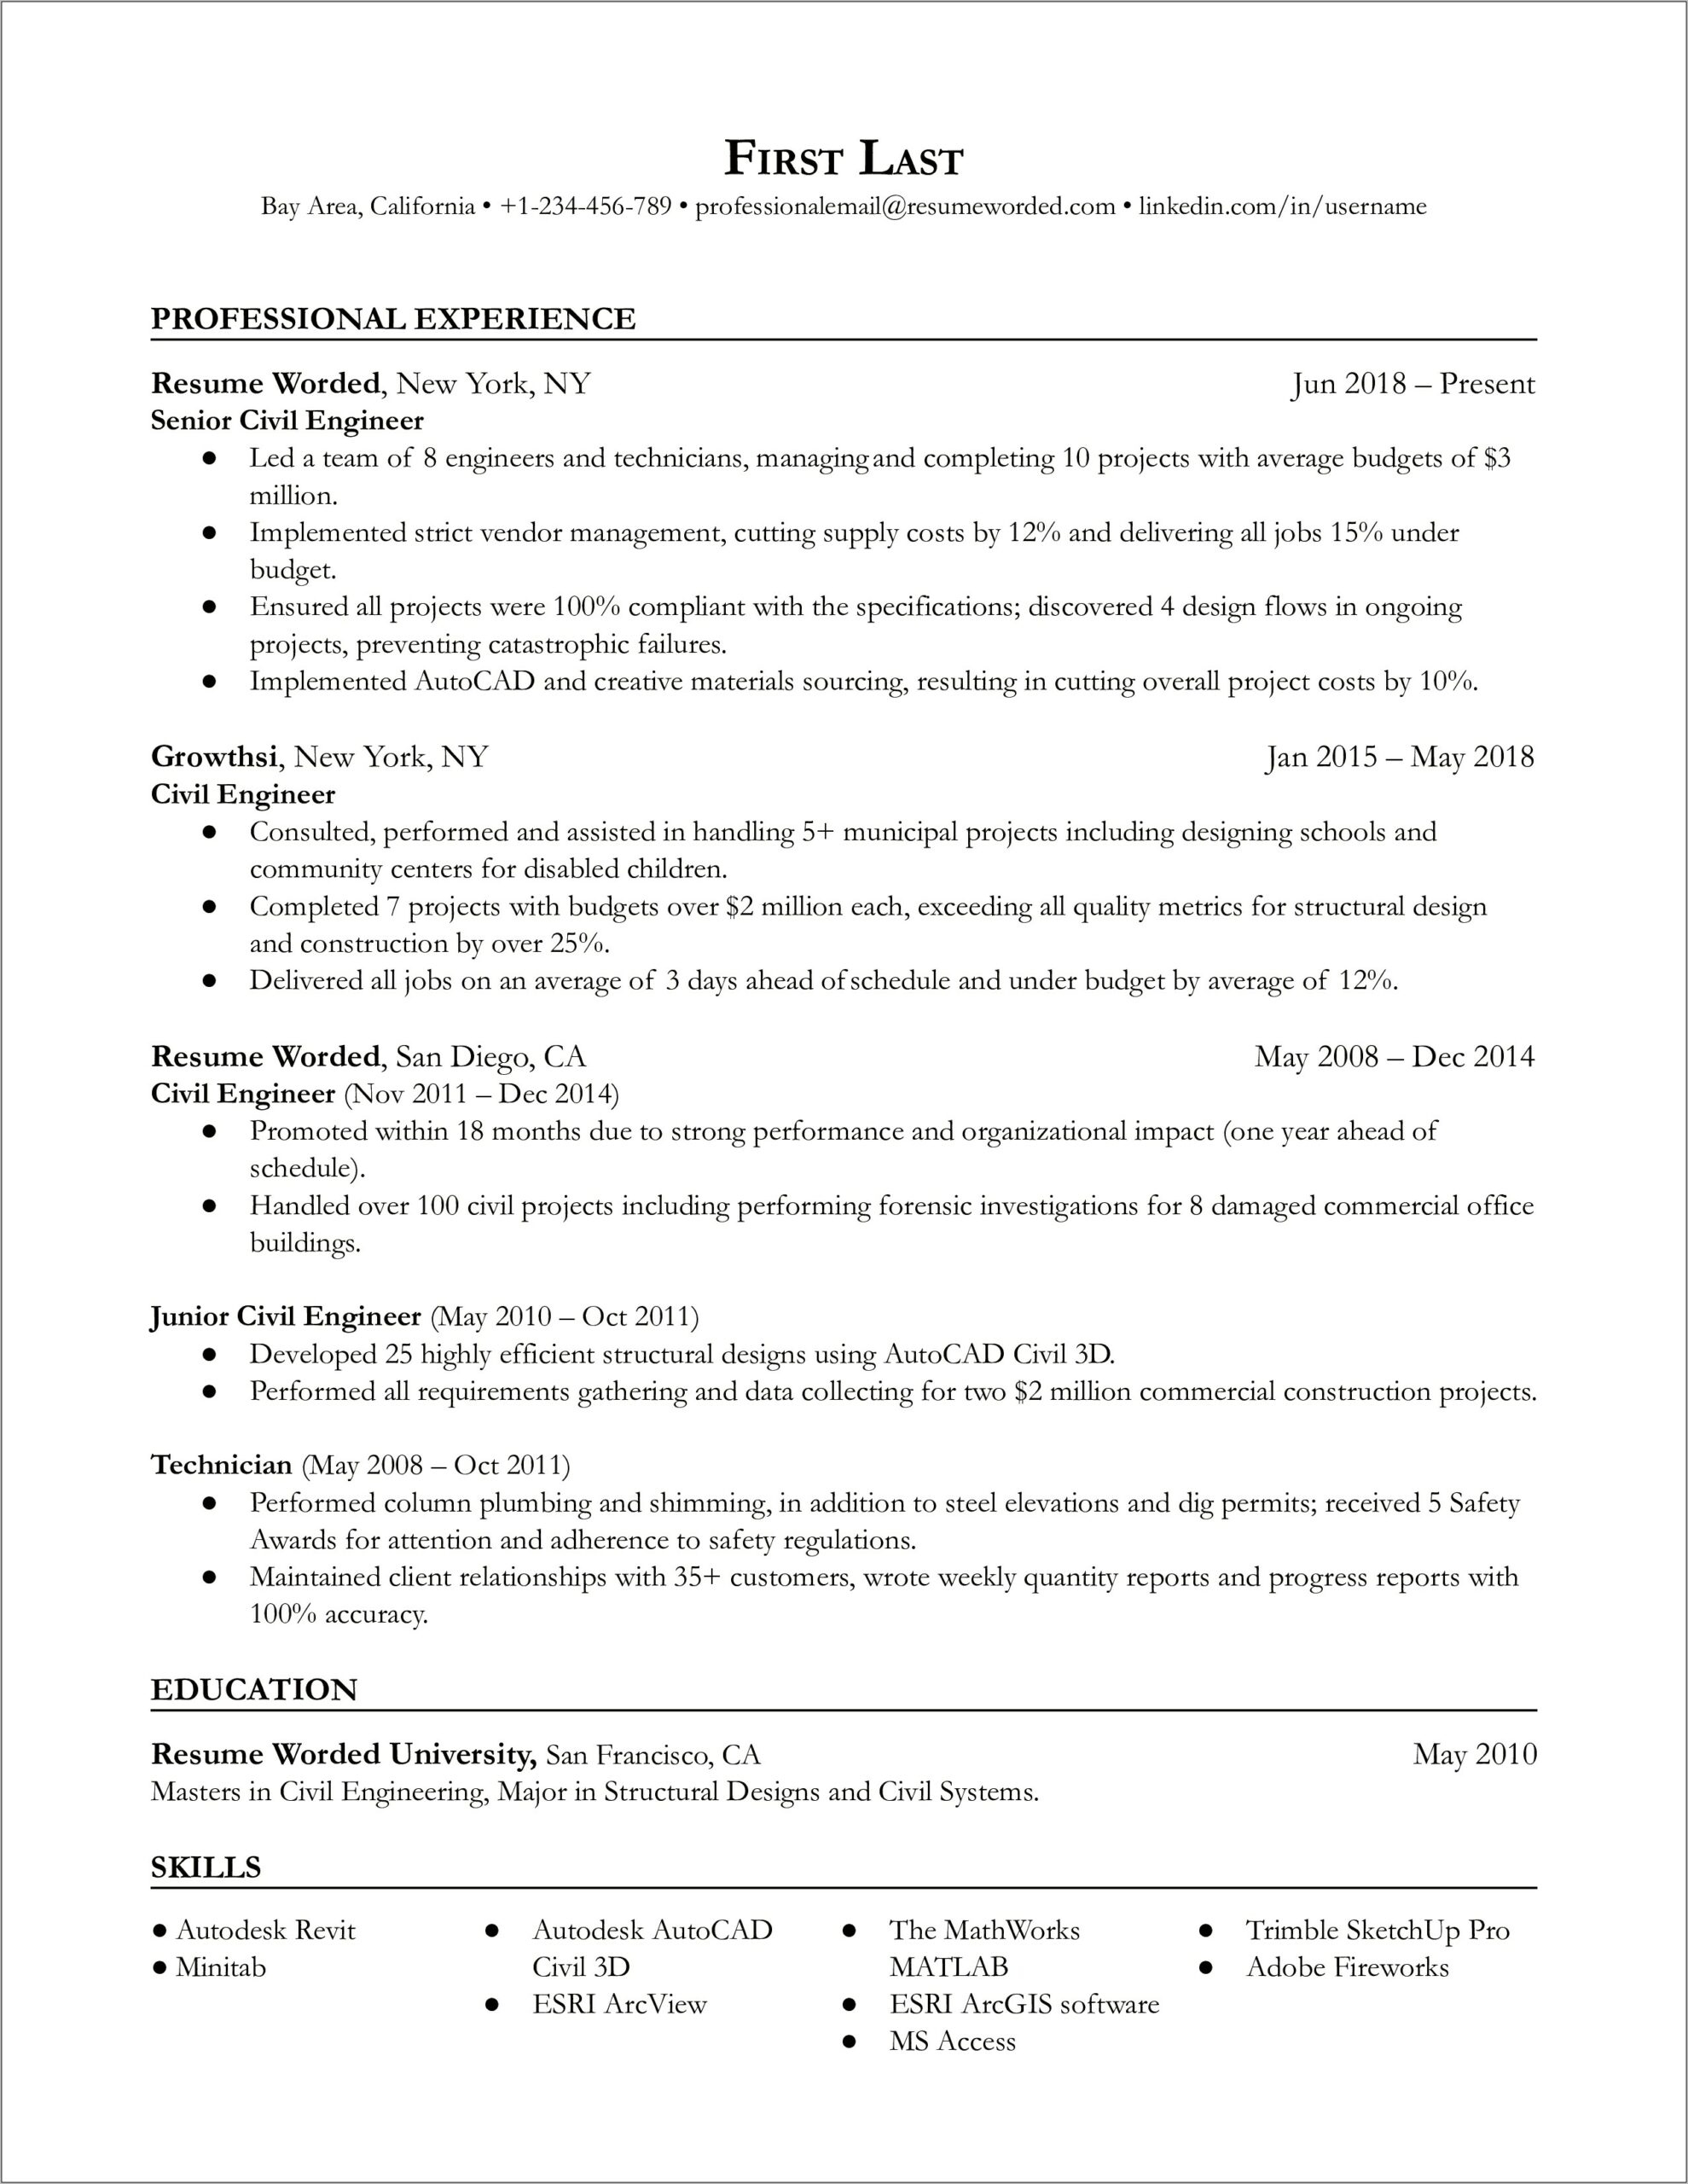 Professional Summary For Civil Engineer Resume